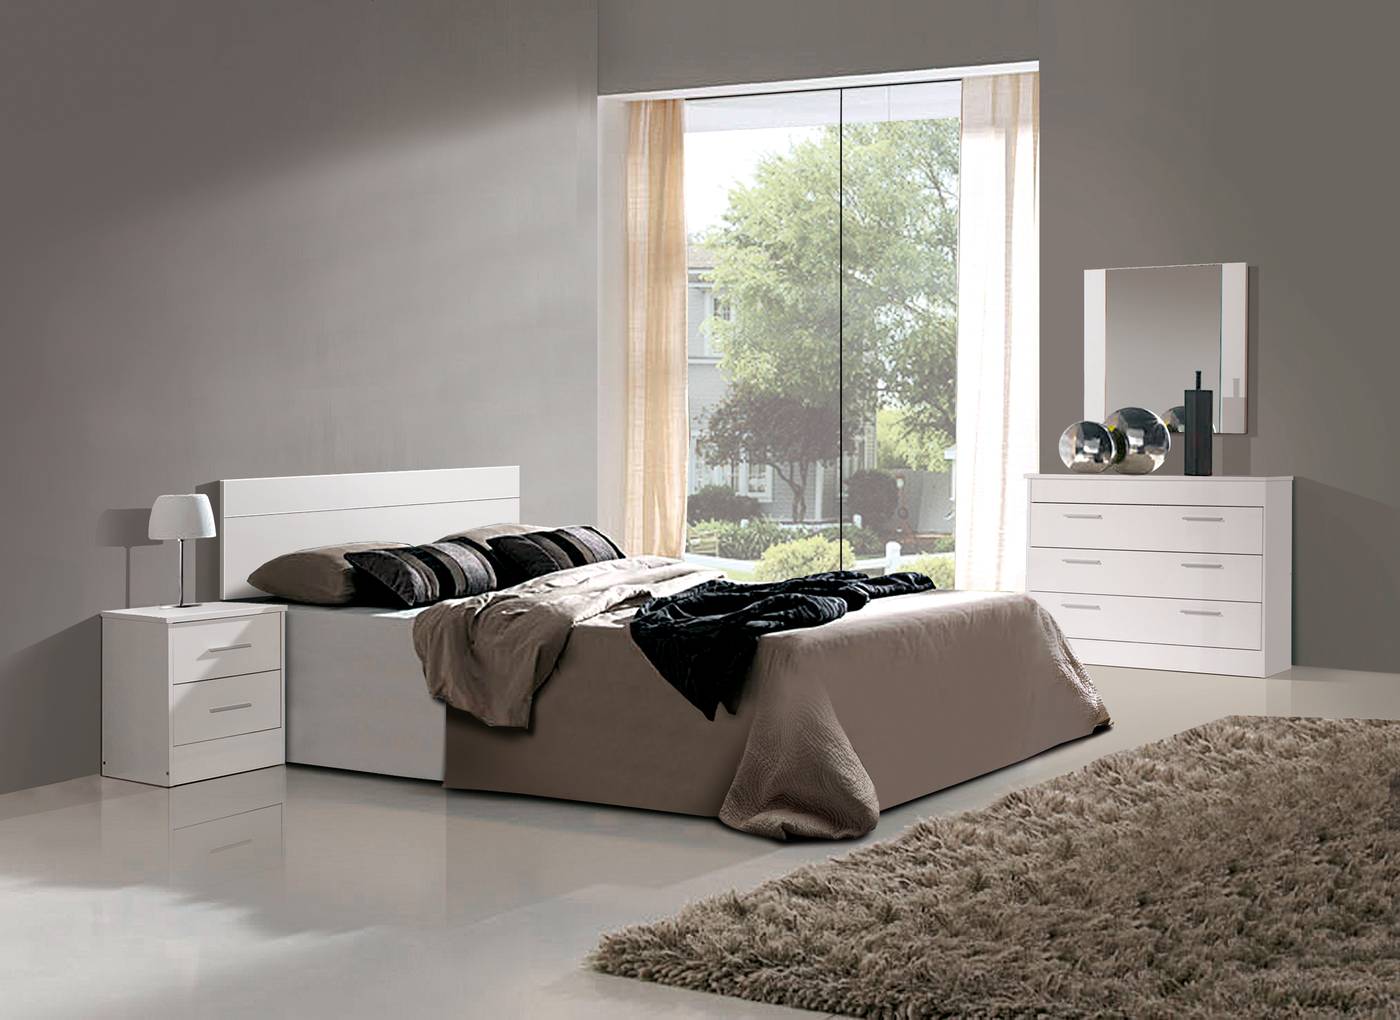 Dormitorio Moderno Blanco - Dormitorio matrimonio color blanco, roble claro, fresno o ceniza combinado con blanco